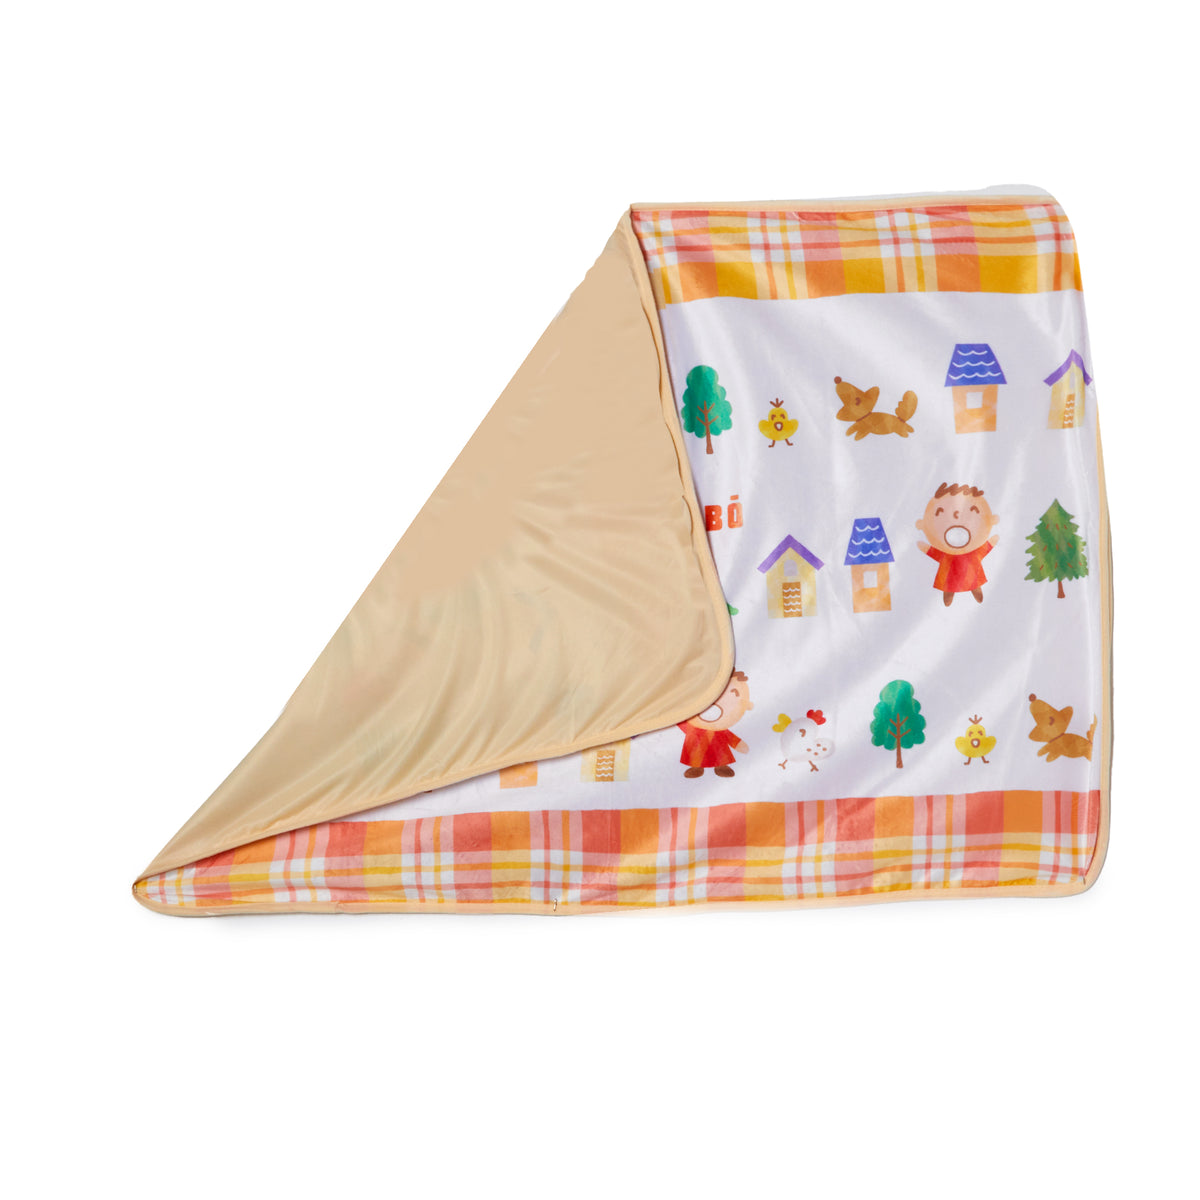 Minna no Tabo Lap Blanket (Orange Plaid Series) Home Goods Global Original   